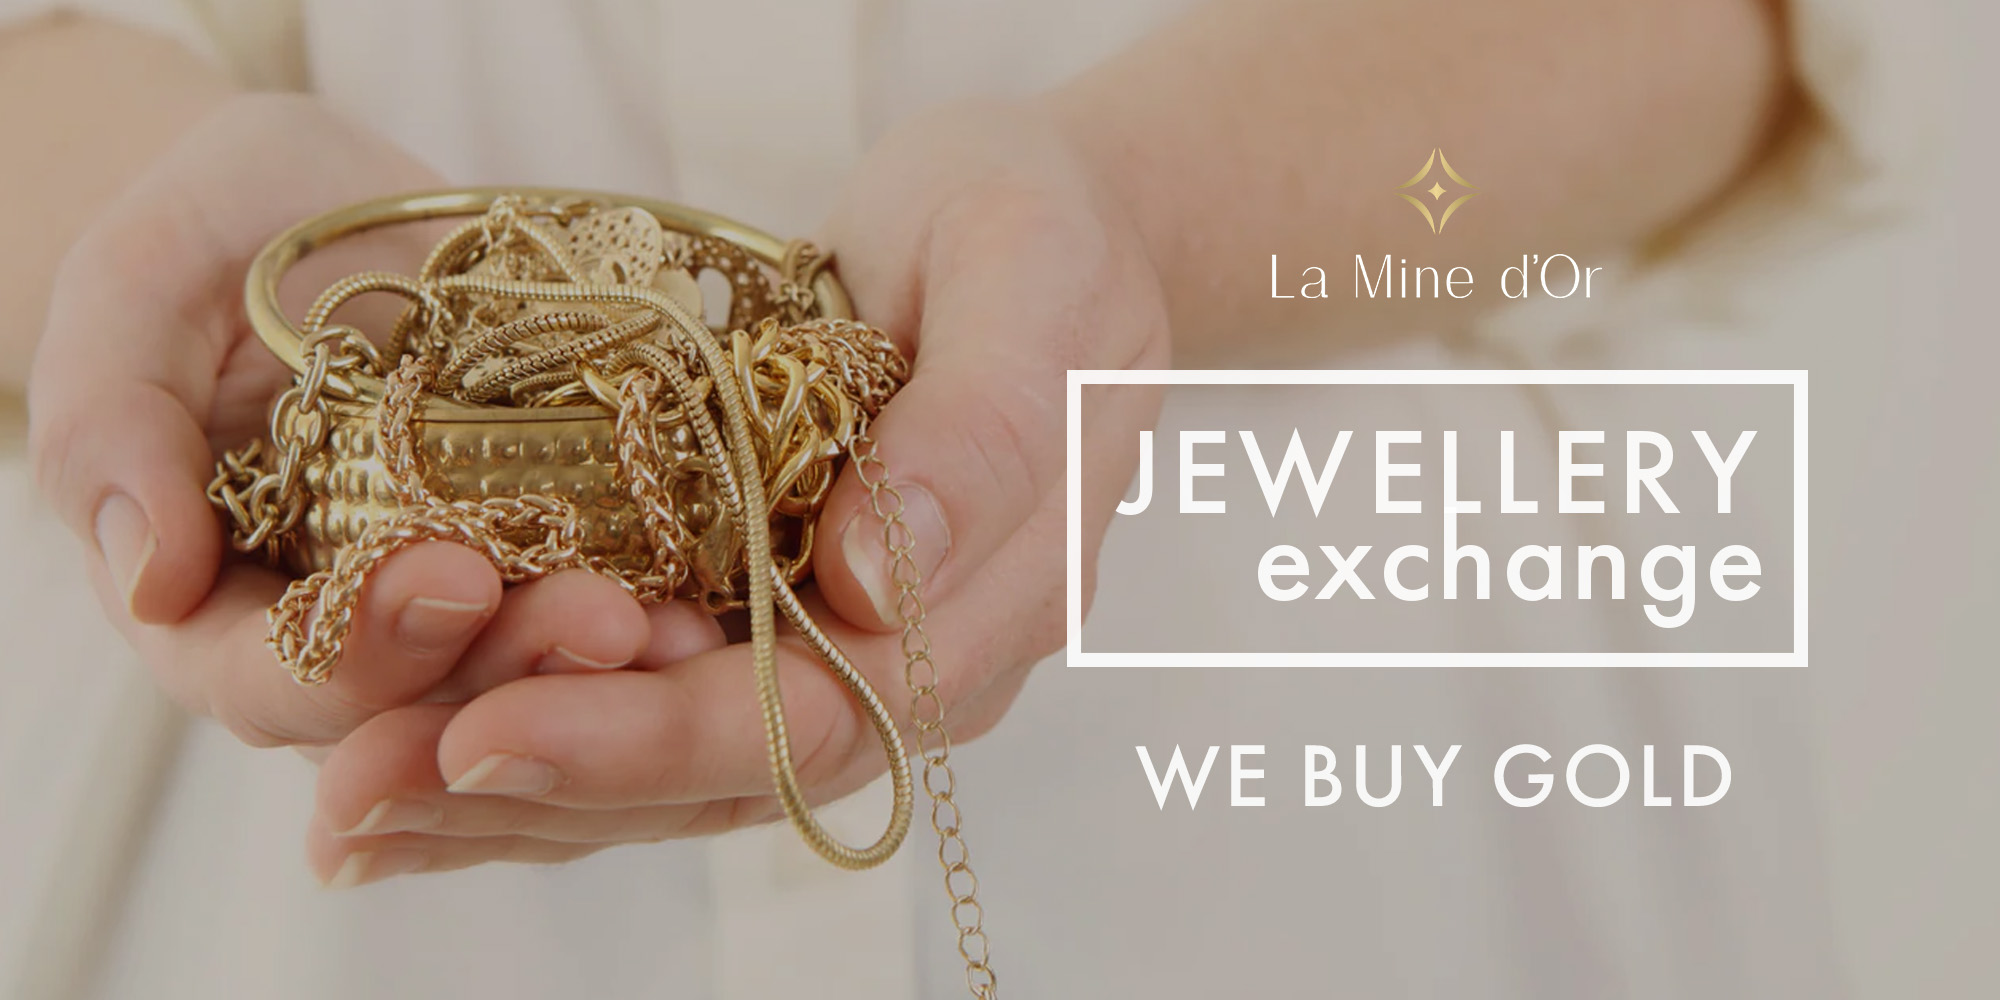 Jewellery Exchange We Buy Gold at La Mine d'Or Jewellers, Moncton New Brunswick, Halifax Nova Scotia